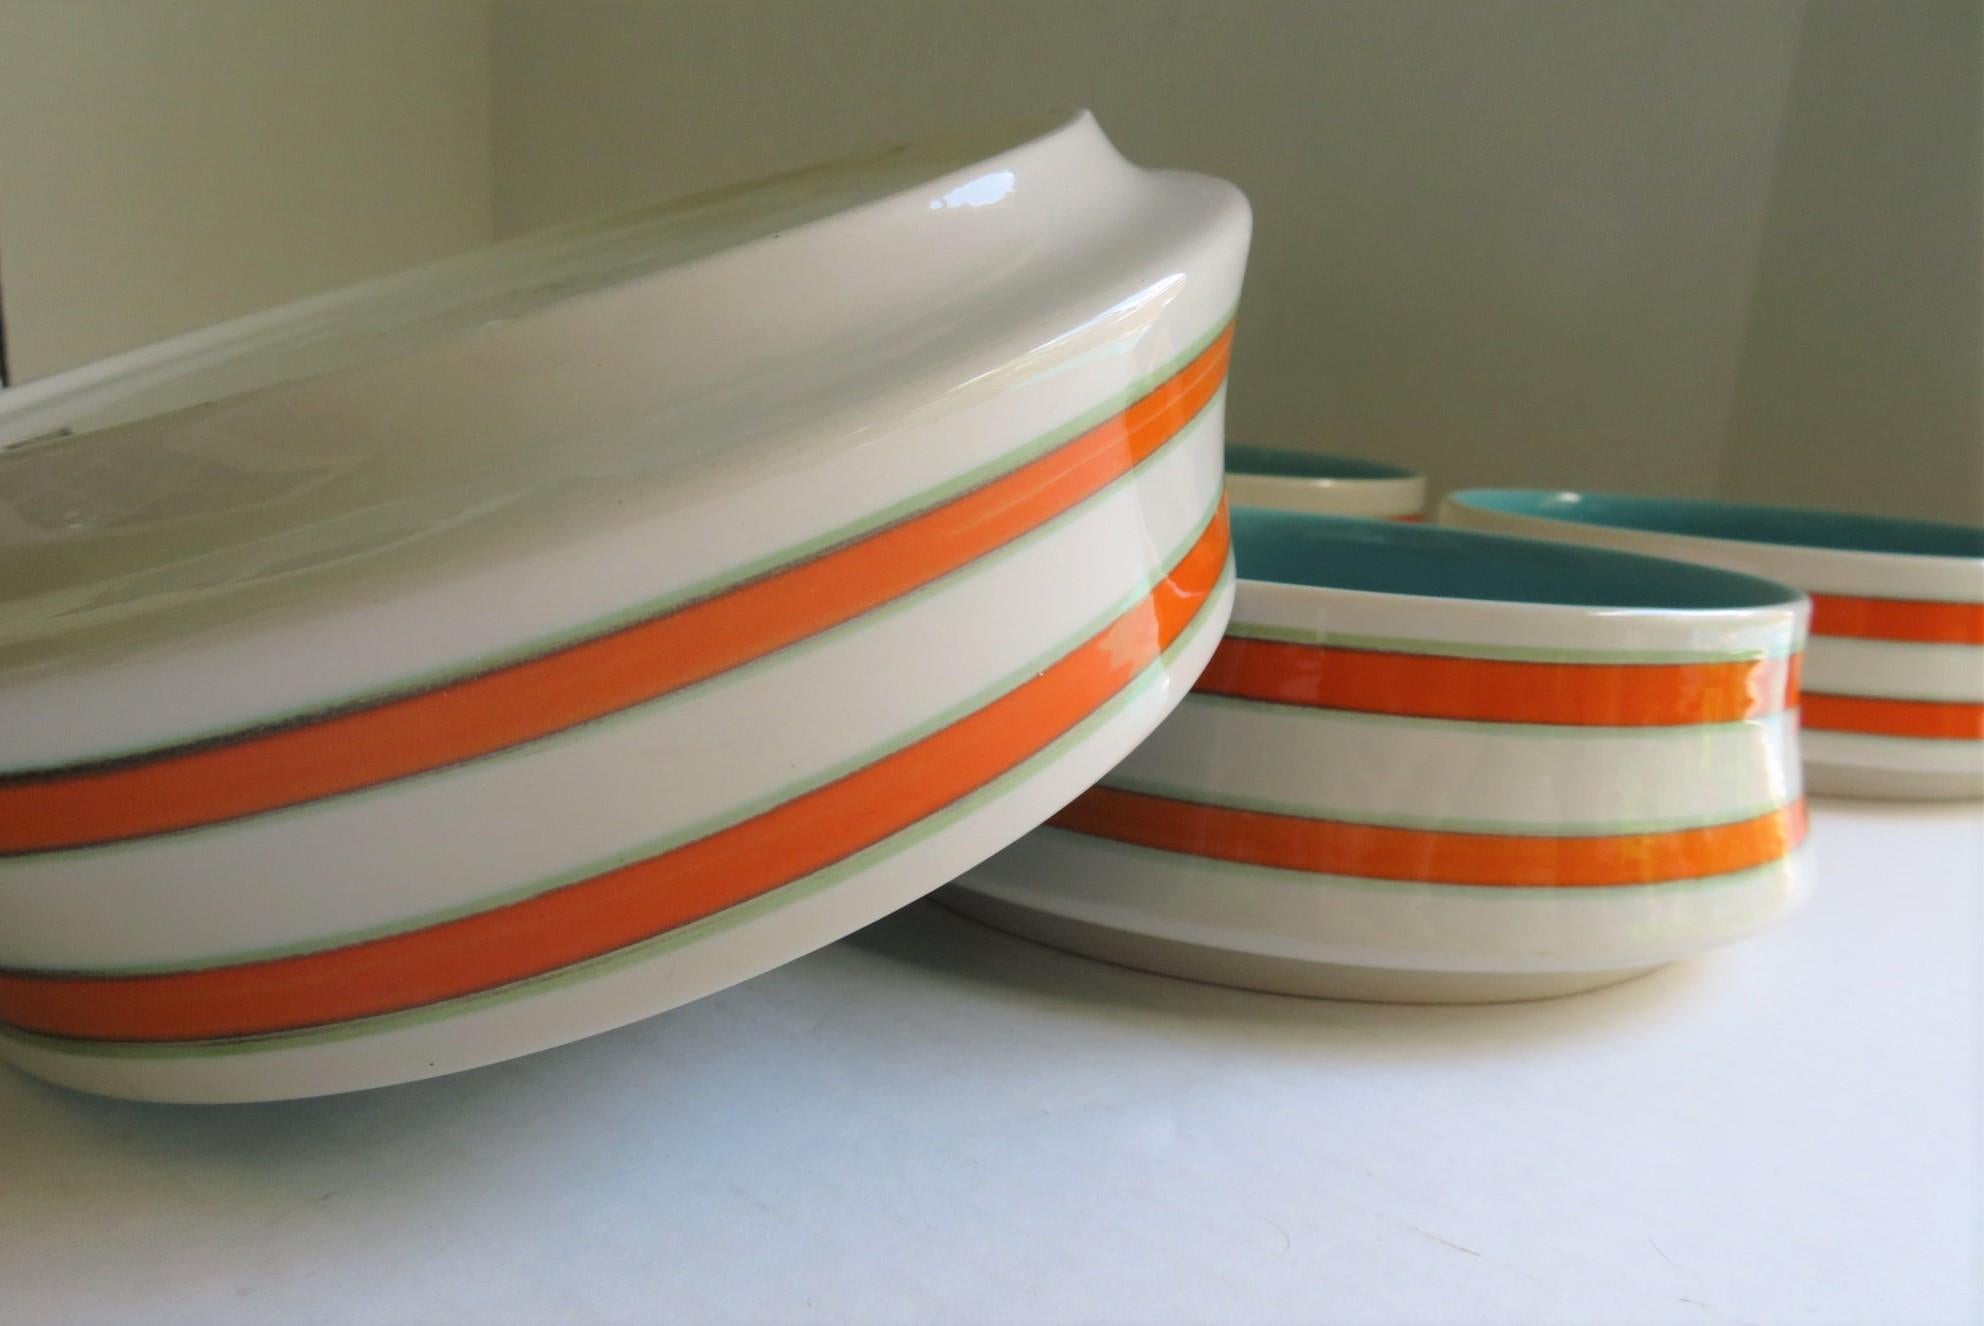 Glazed Six 1960s Colorful Bowls, Mancer for Ceramar, Mancioli of Italy